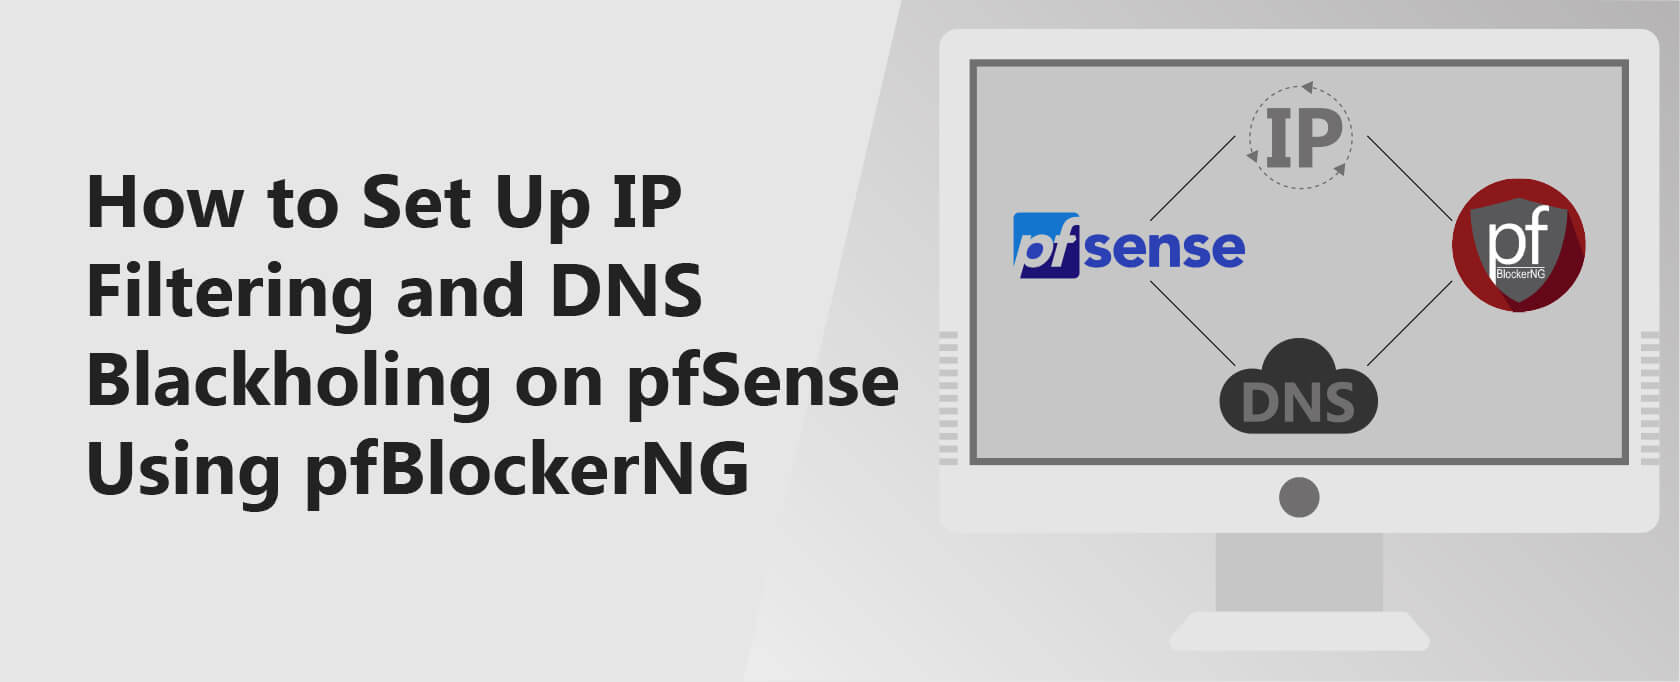 How to Set Up IP Filtering and DNS Blackholing on pfSense Using pfBlockerNG